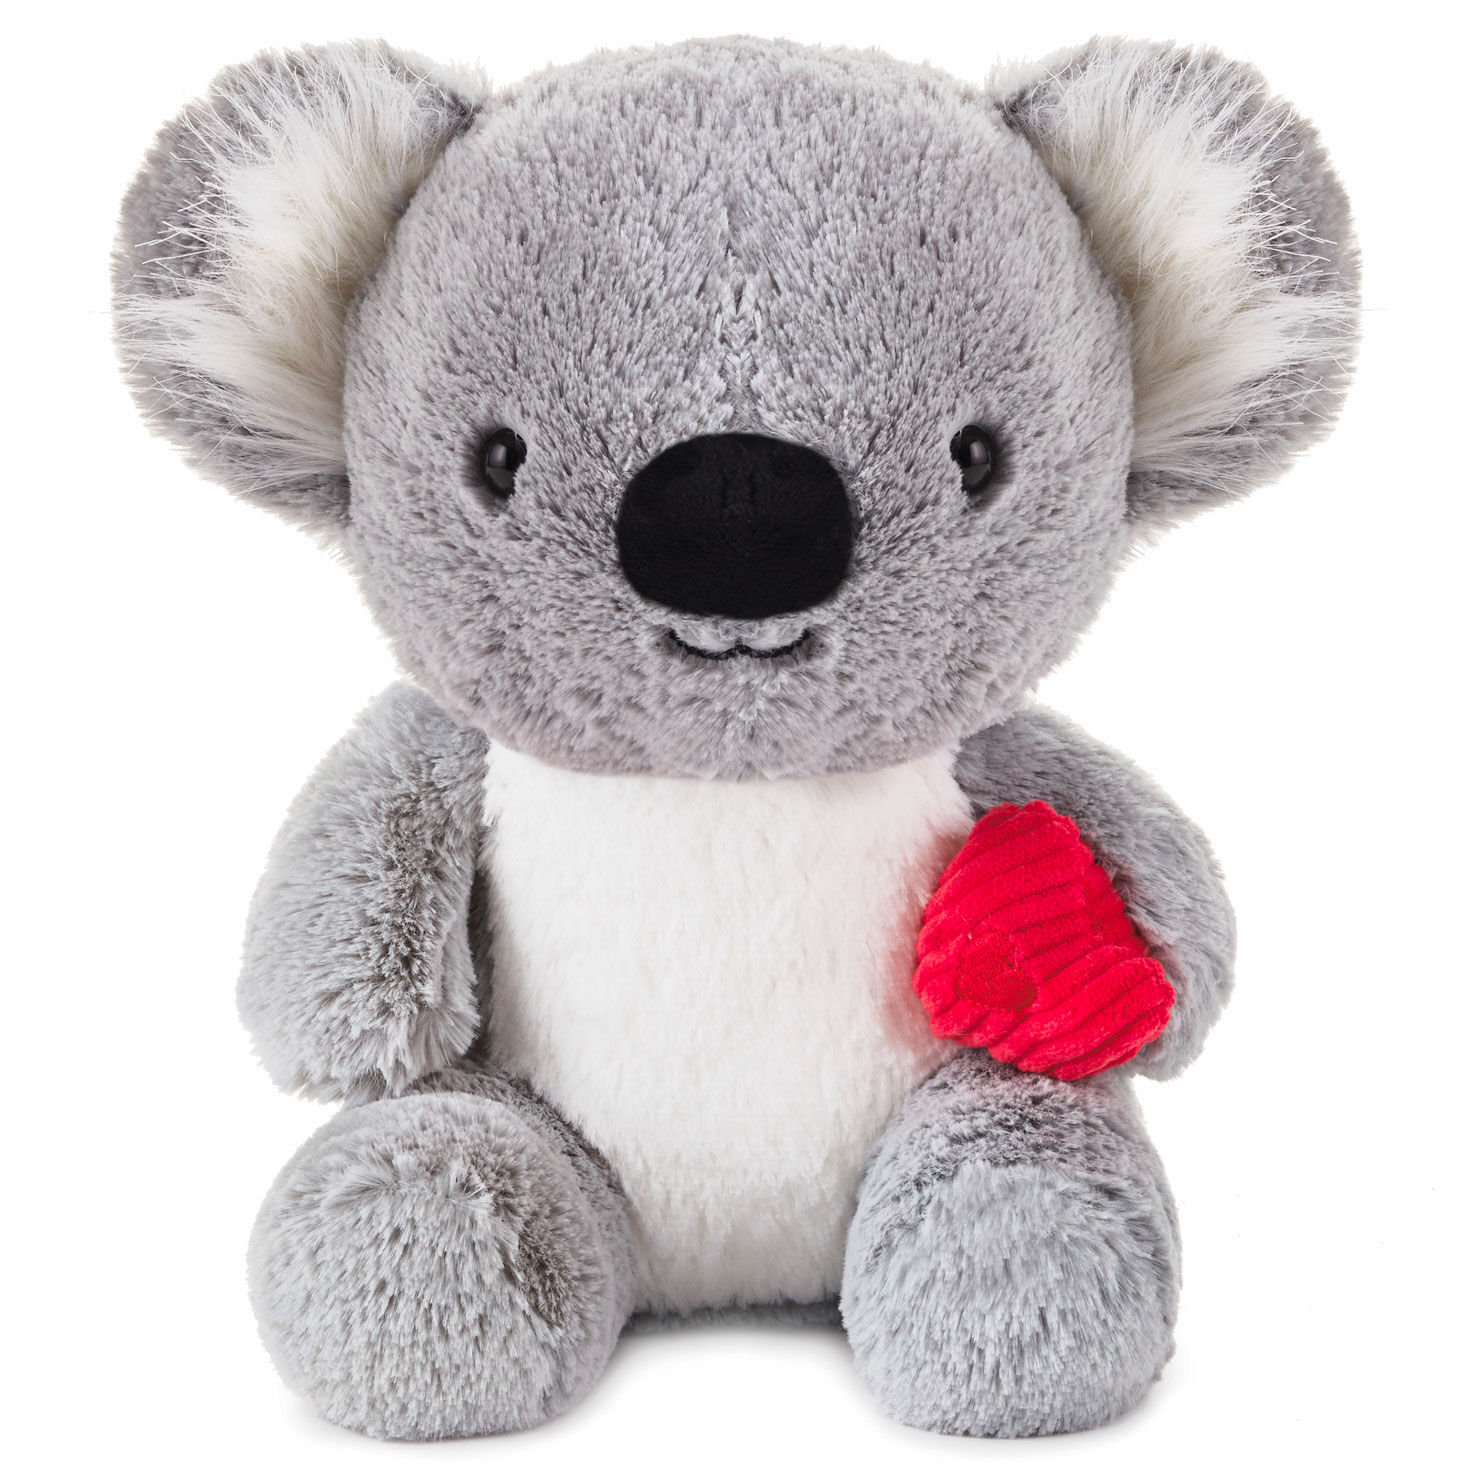 Hallmark Record a Name Singing Teddy Bear Stuffed Animal for sale online 